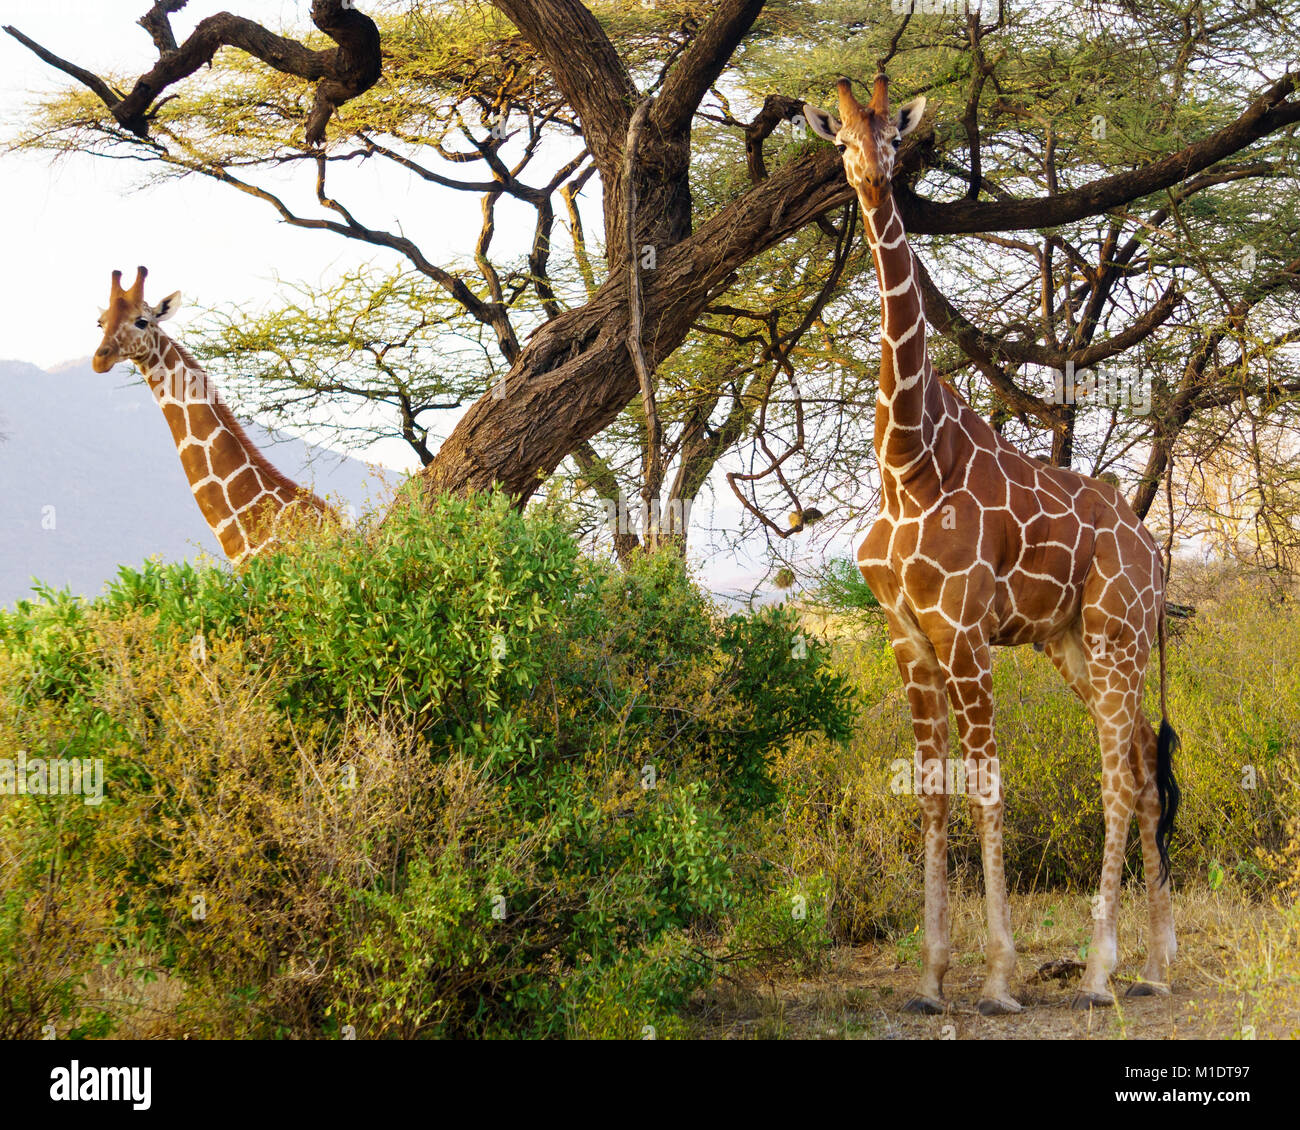 Reticulated giraffes in Samburu or Buffalo Springs National Reserve Stock Photo